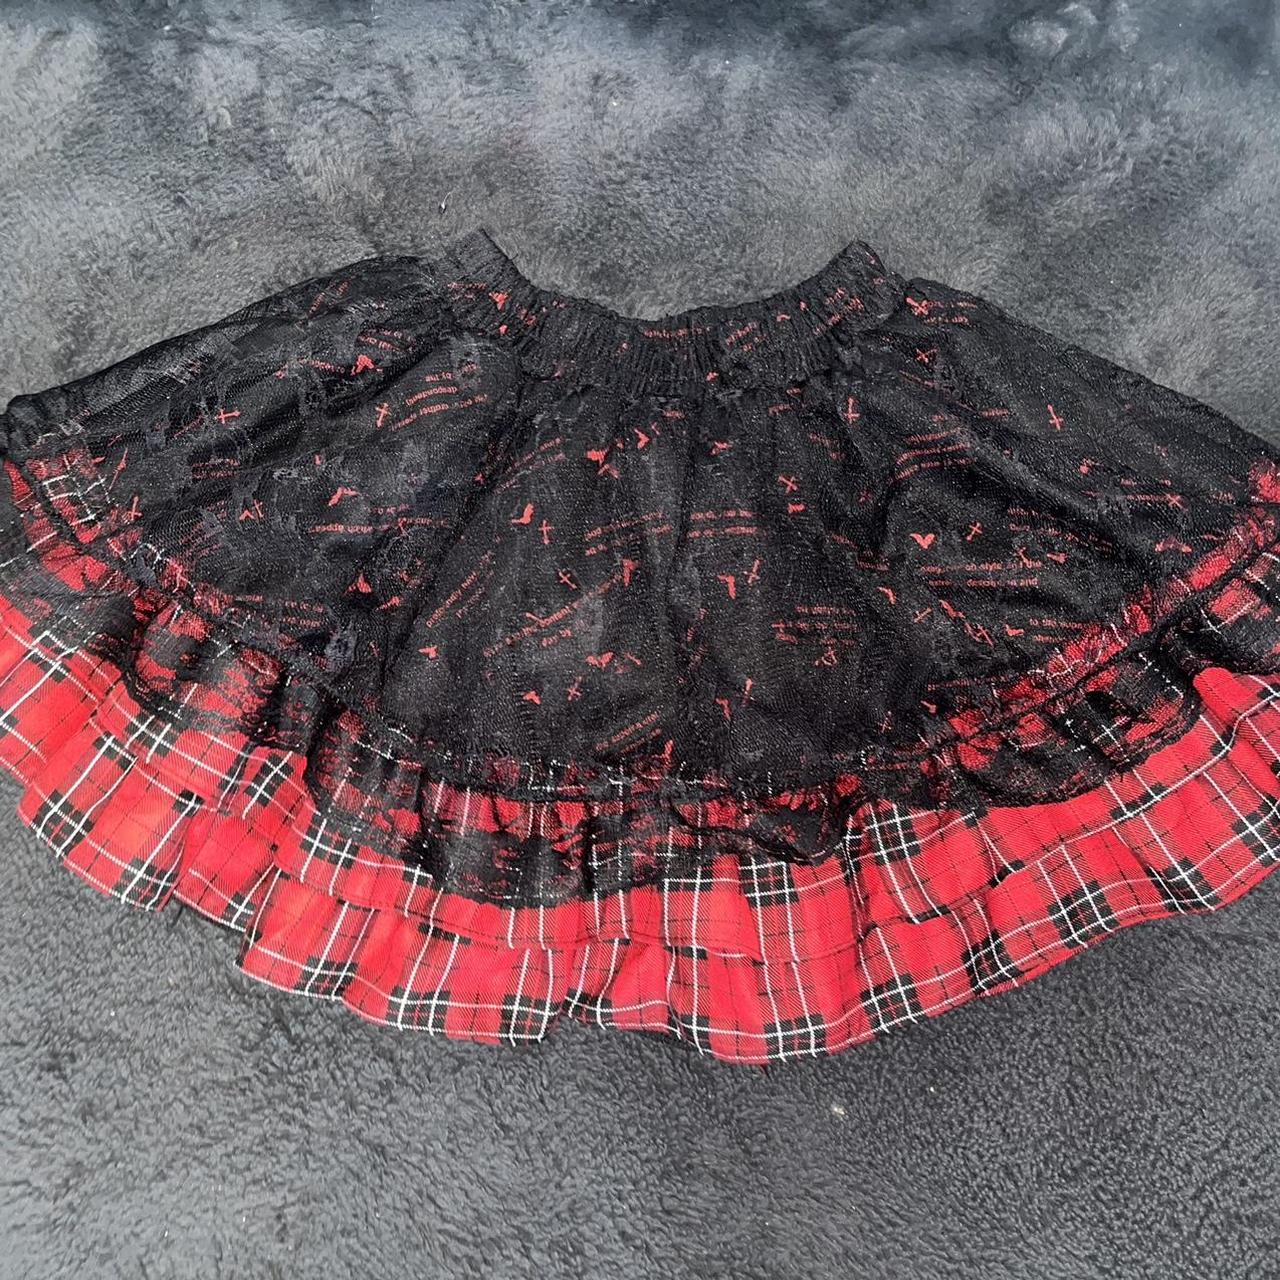 mallgoth skirt, brand is G.L.P (gothic lolita &... - Depop